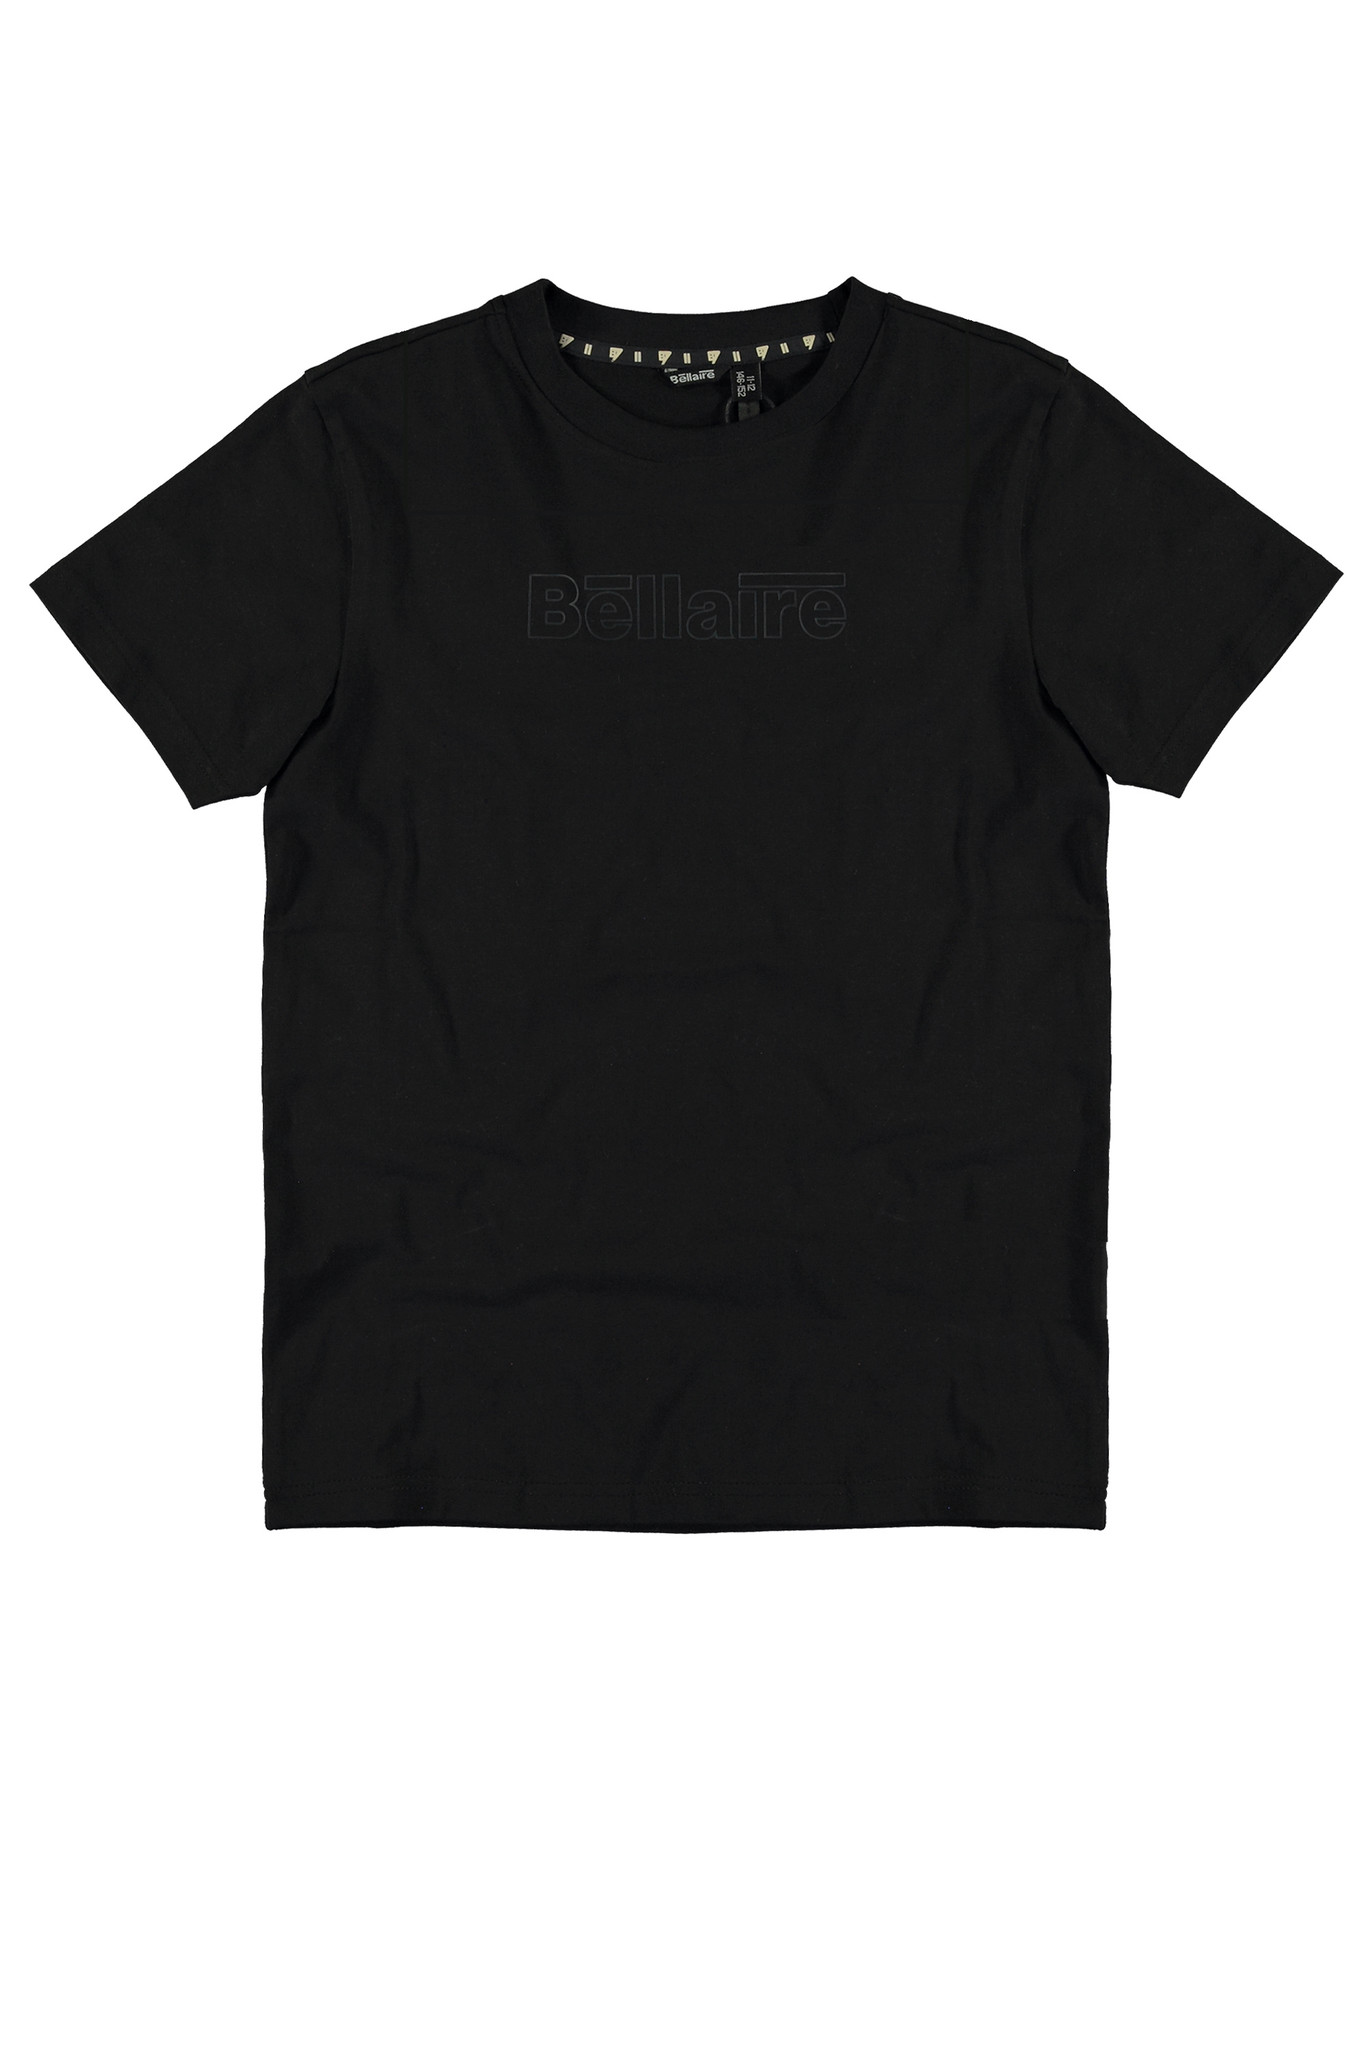 Bellaire Jongens t-shirt - Jet Zwart